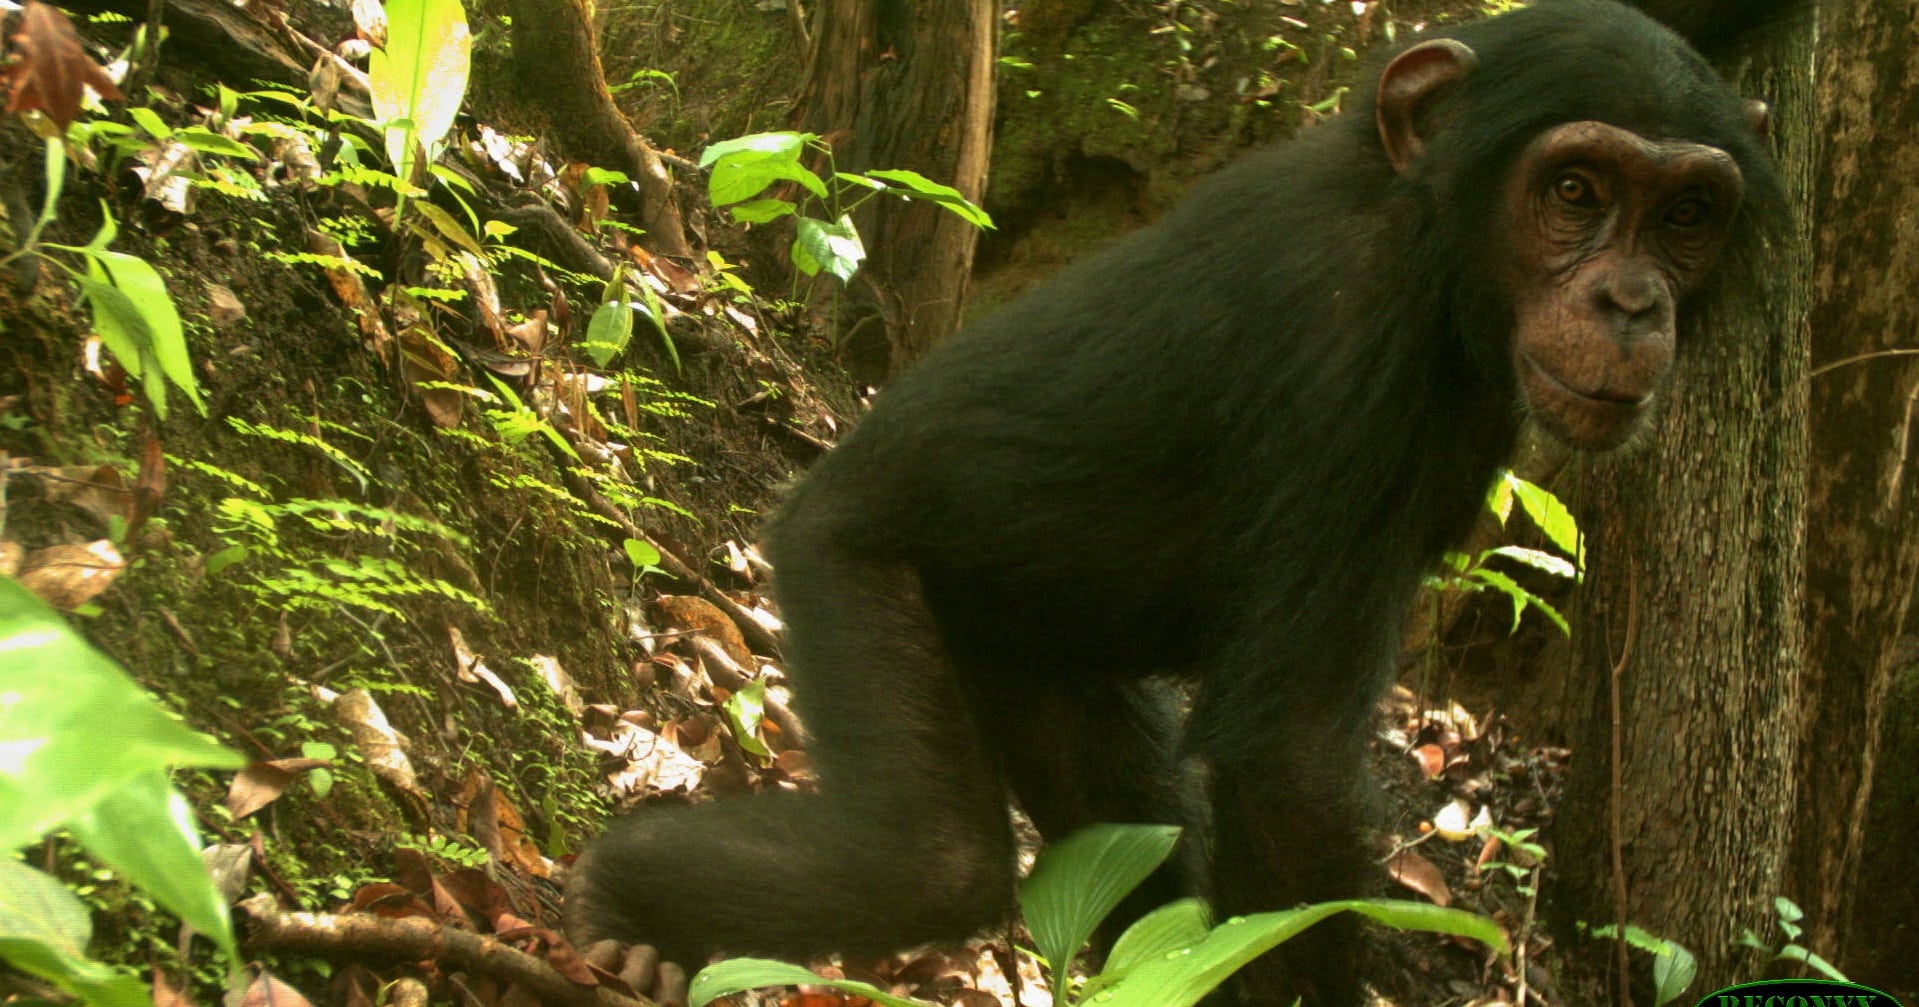 Monitoring chimpanzee behaviour at Gashaka Gumti National Park